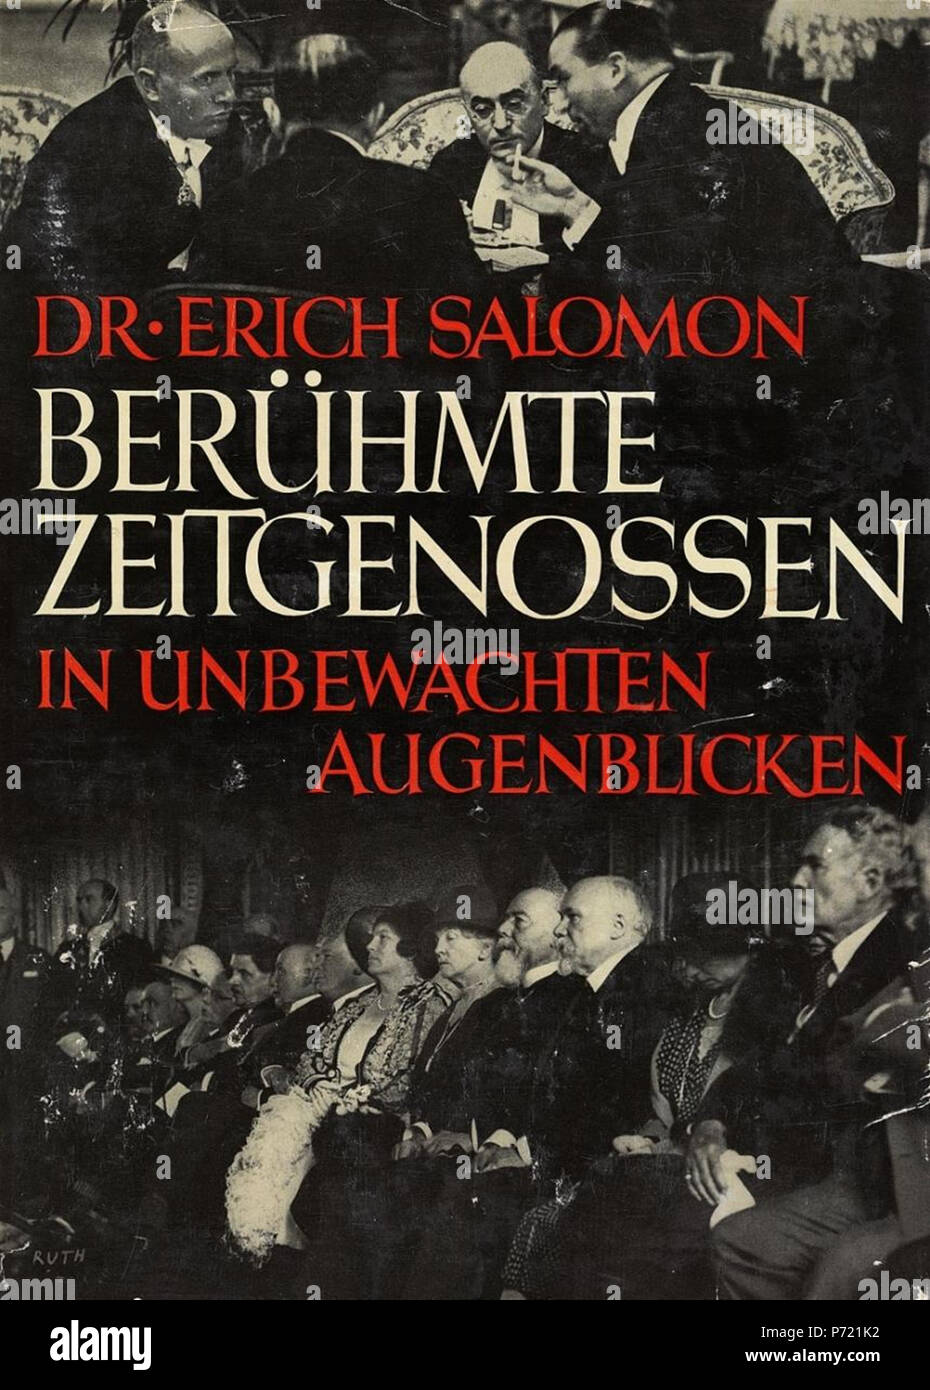 15 Erich Salomon - Berühmte Zeitgenossen in unbewachten Augenblicken. Engelhorn, Stuttgart 1931 Stock Photo